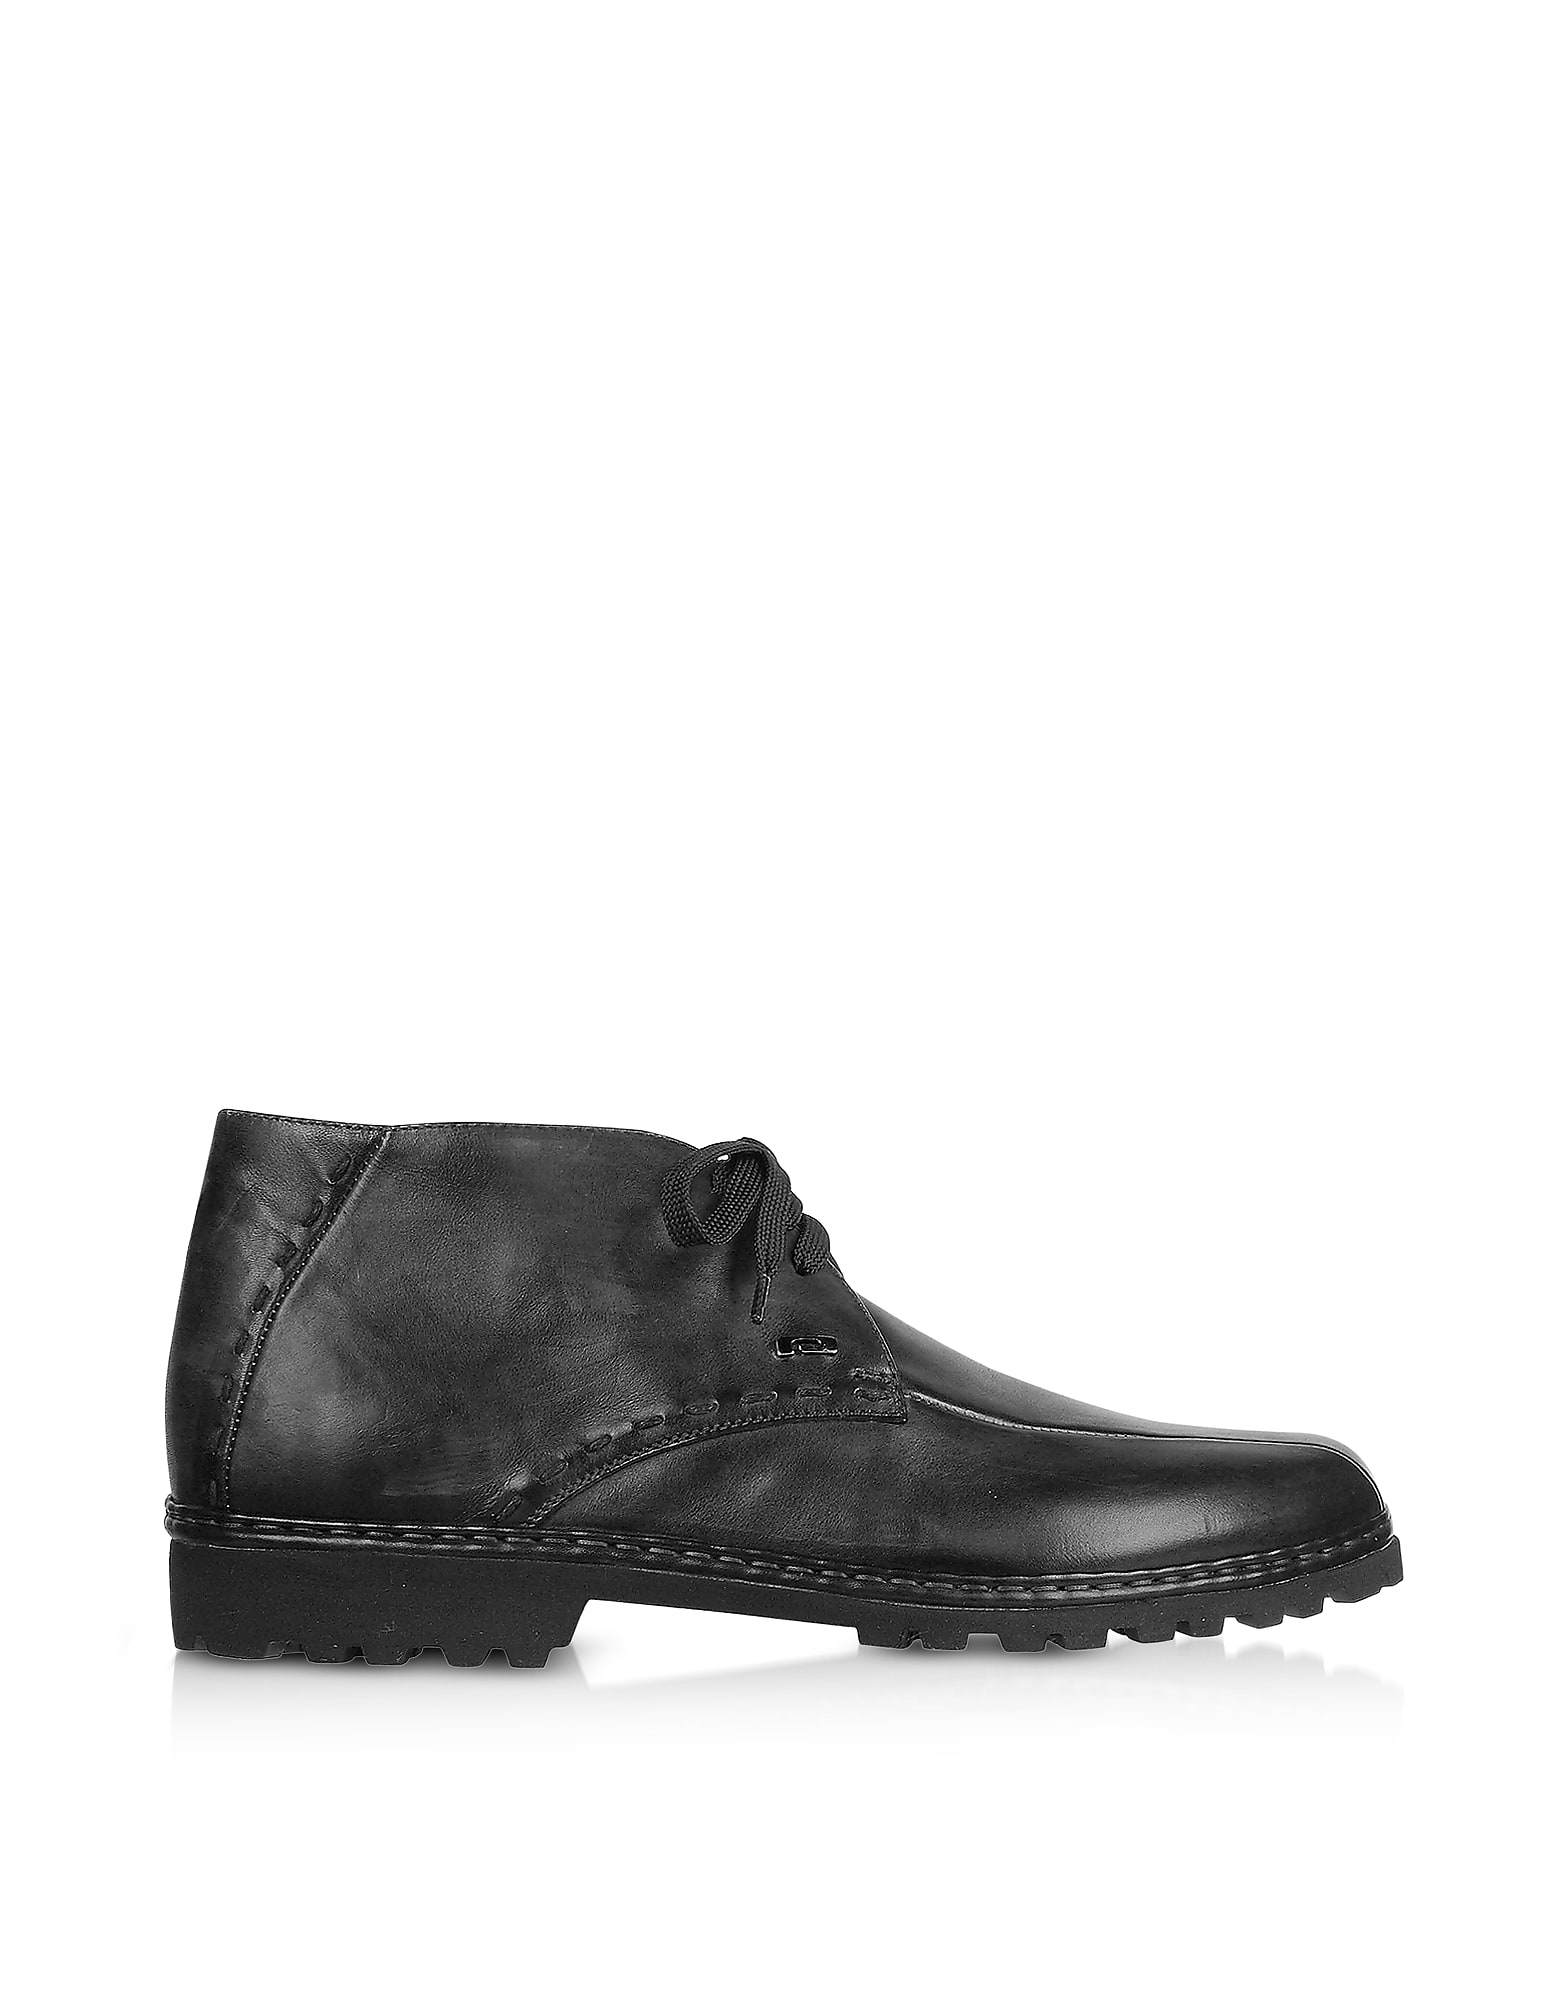 Black Handmade Italian Leather Ankle Boots